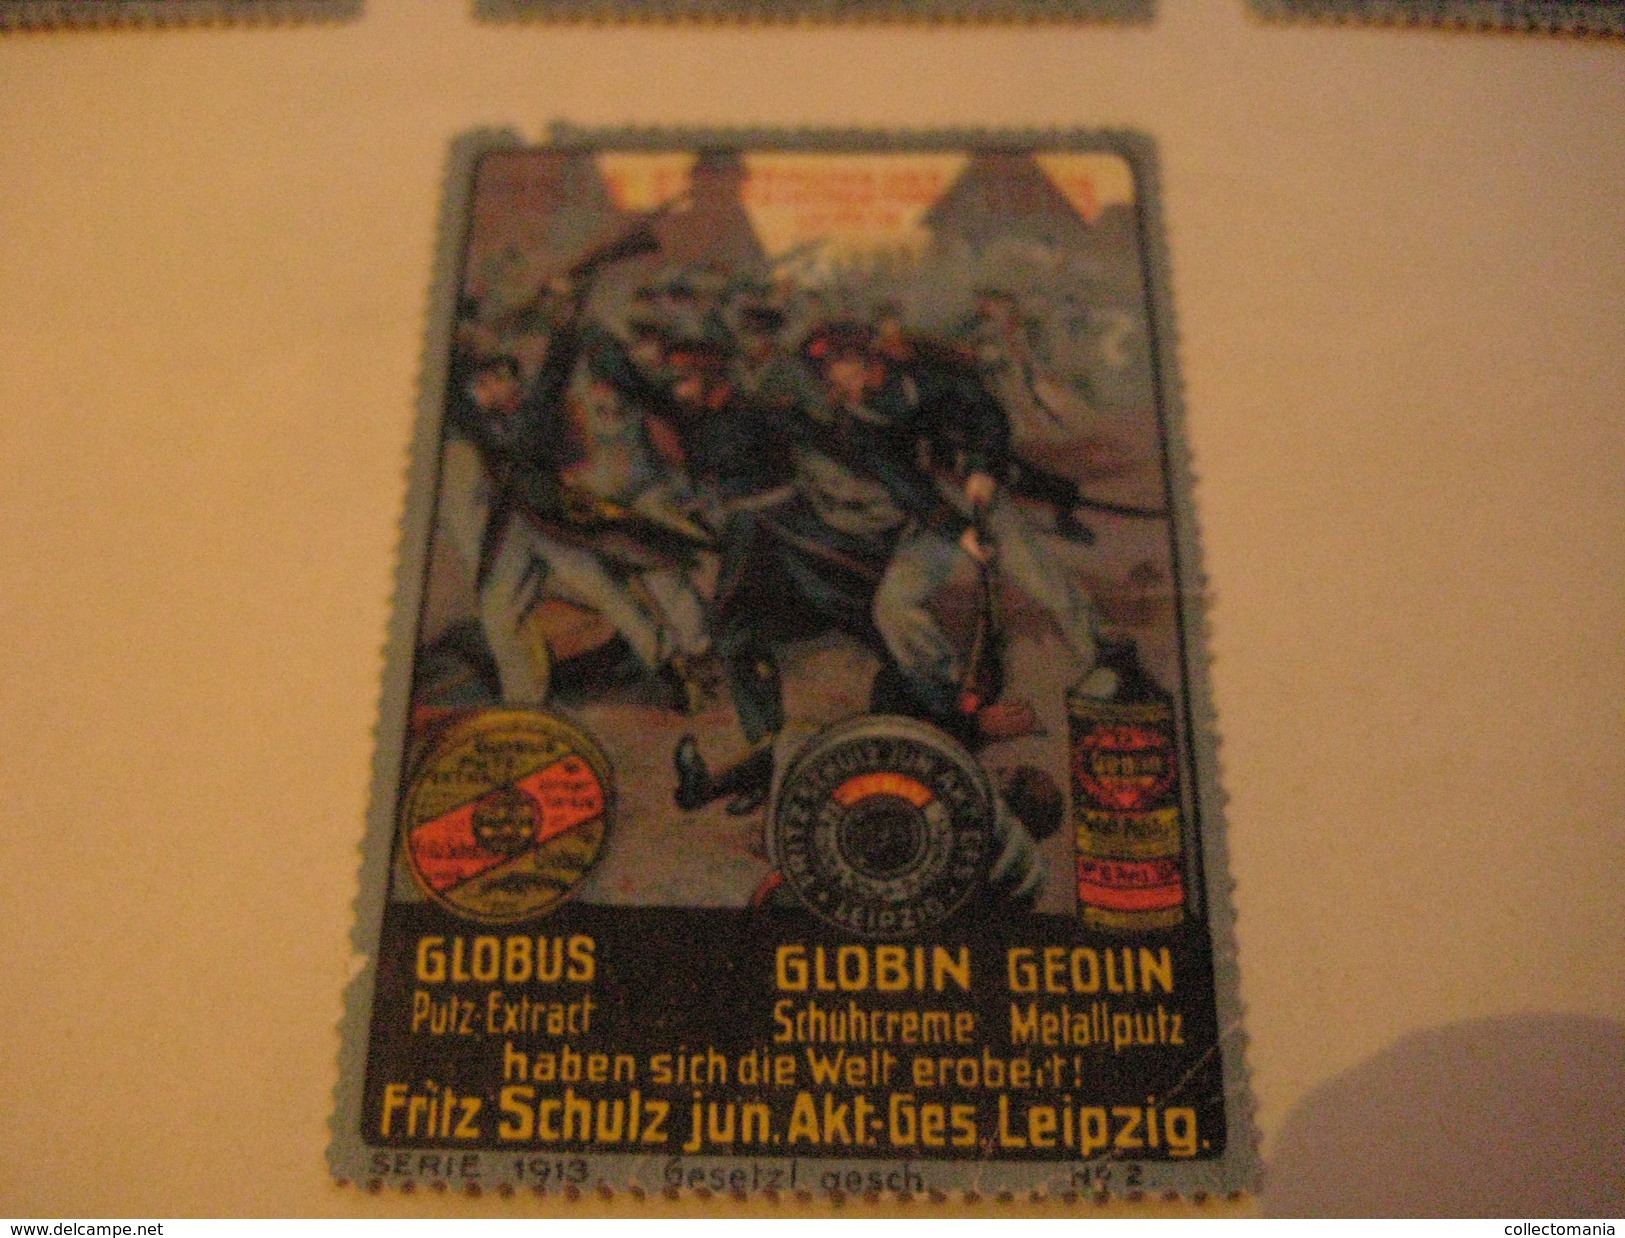 4 poster stamp advertising  litho ART NAPOLEON  Fritz Schutz Leipzich  GLOBUS GEOLIN GLOBIN Metall putz